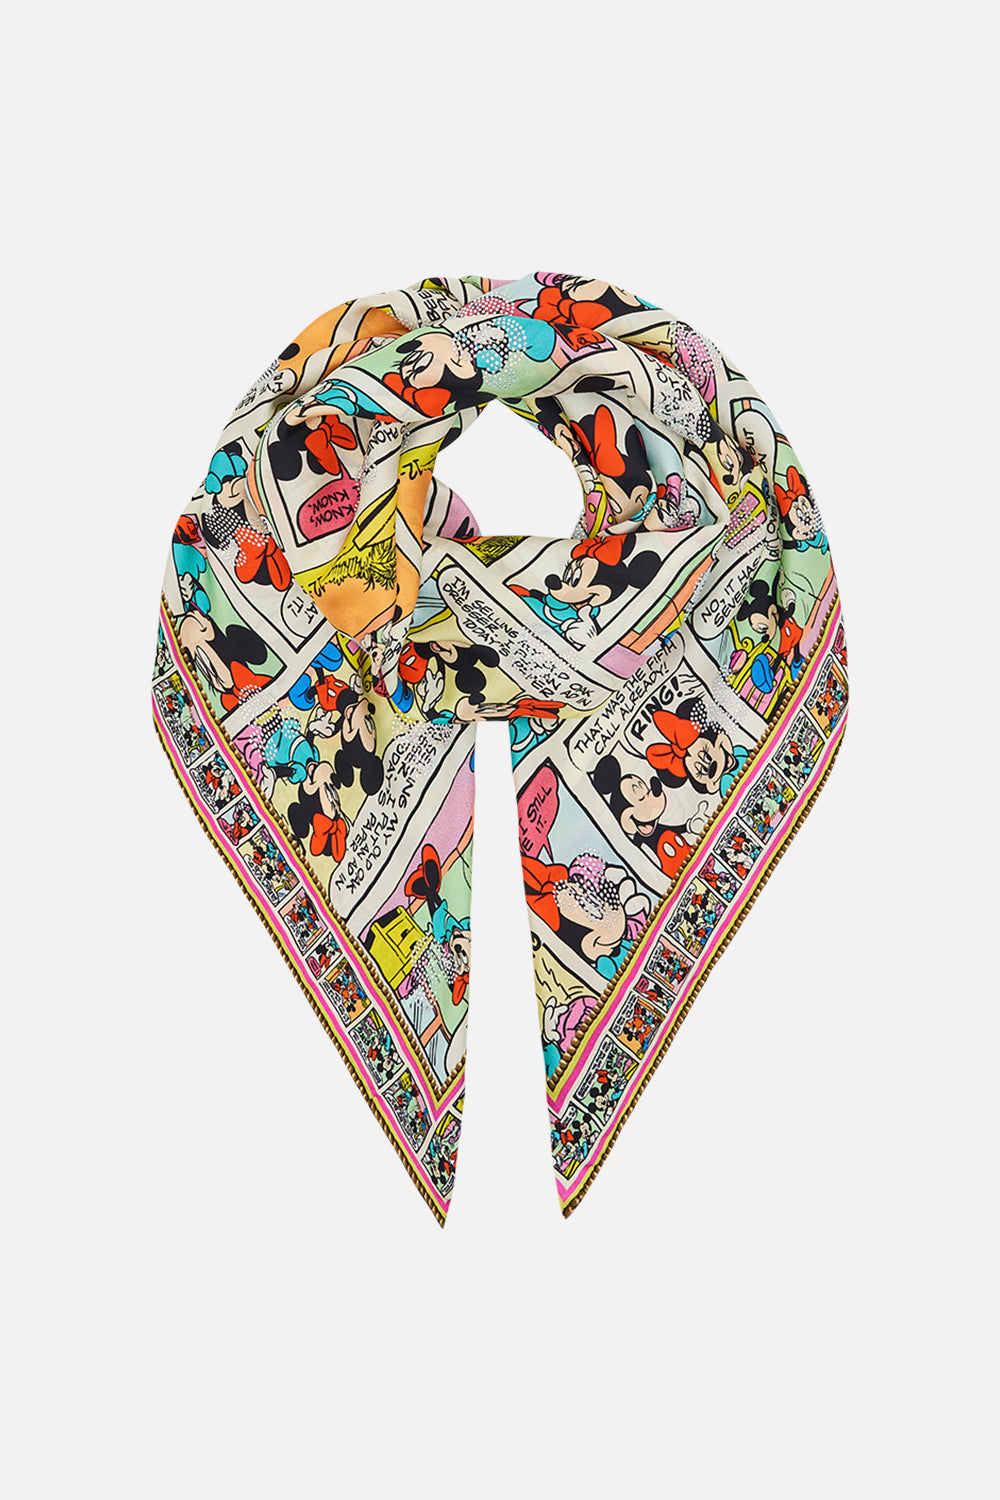 Disney x CAMILLA silk scarf in A Trip Down Comic Strip print